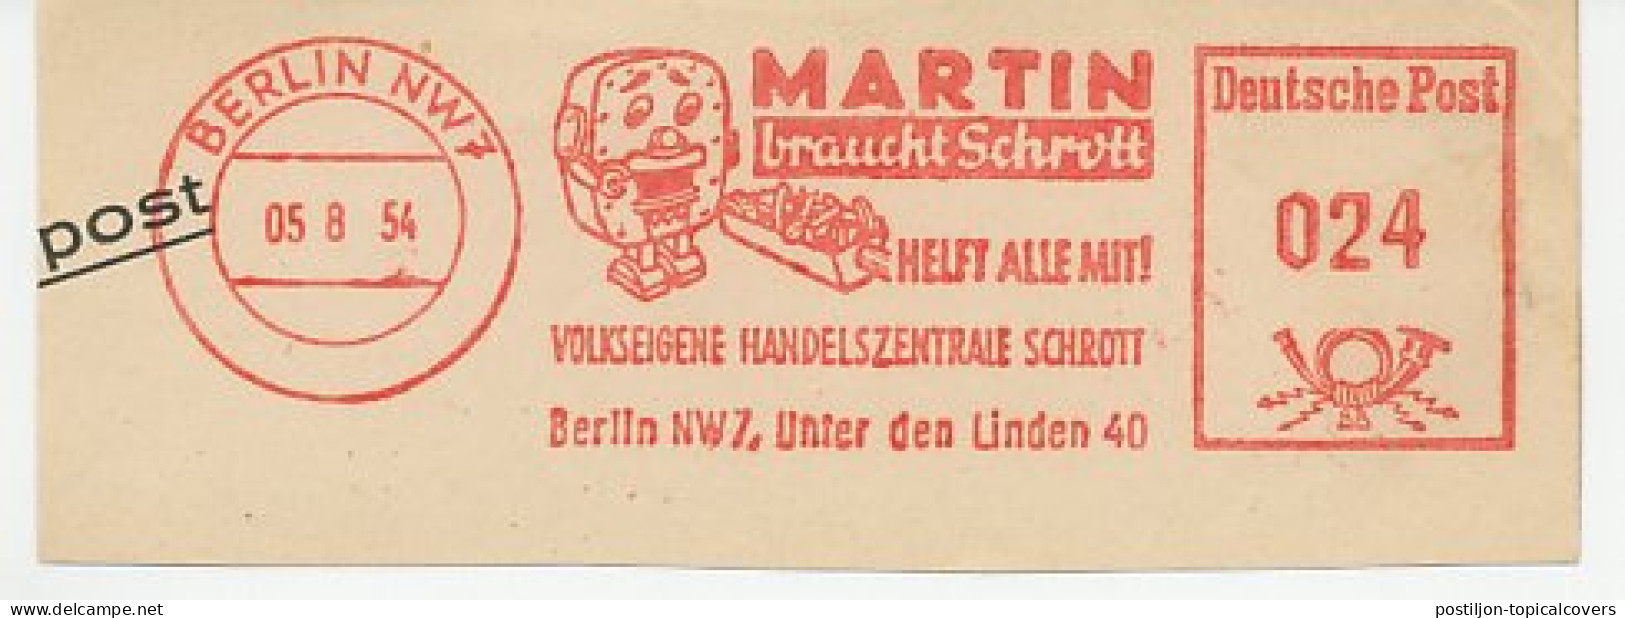 Meter Cut Germany 1954 Recycling - Scrap Metal - Martin Schrott - Fabrieken En Industrieën